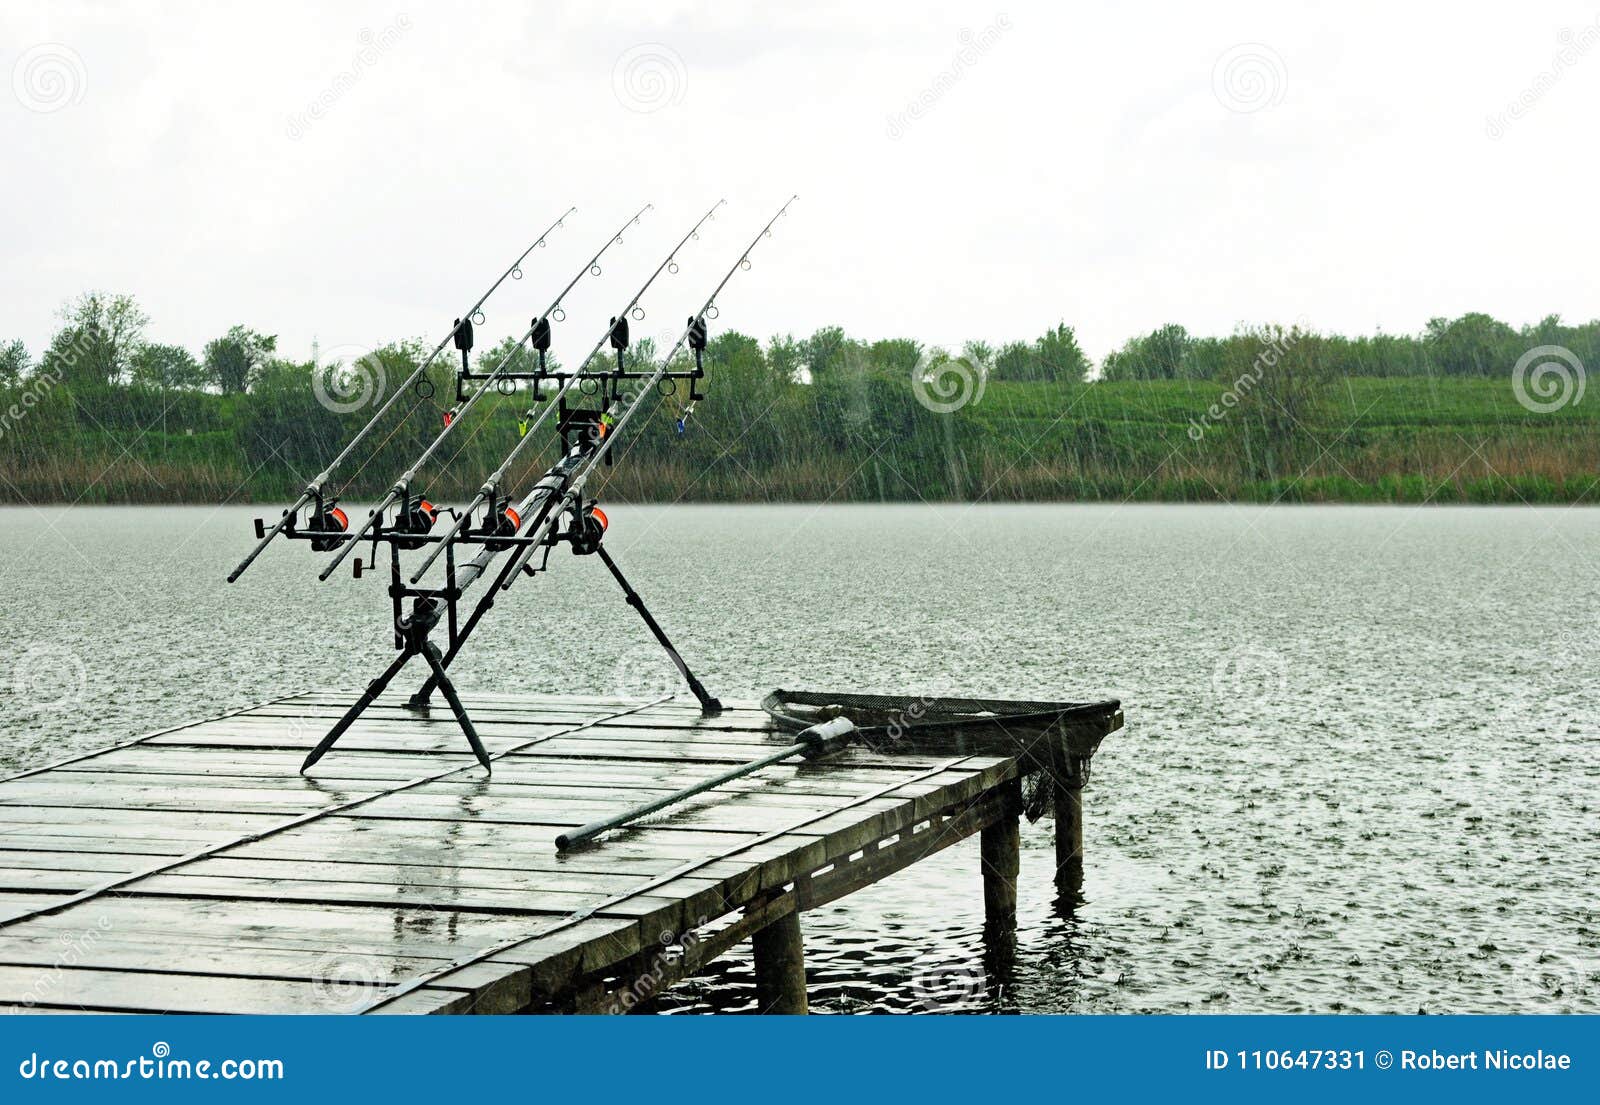 Carp Fishing with Carp Rods on a Rod Pod in Rain Stock Image - Image of  carprods, rain: 110647331